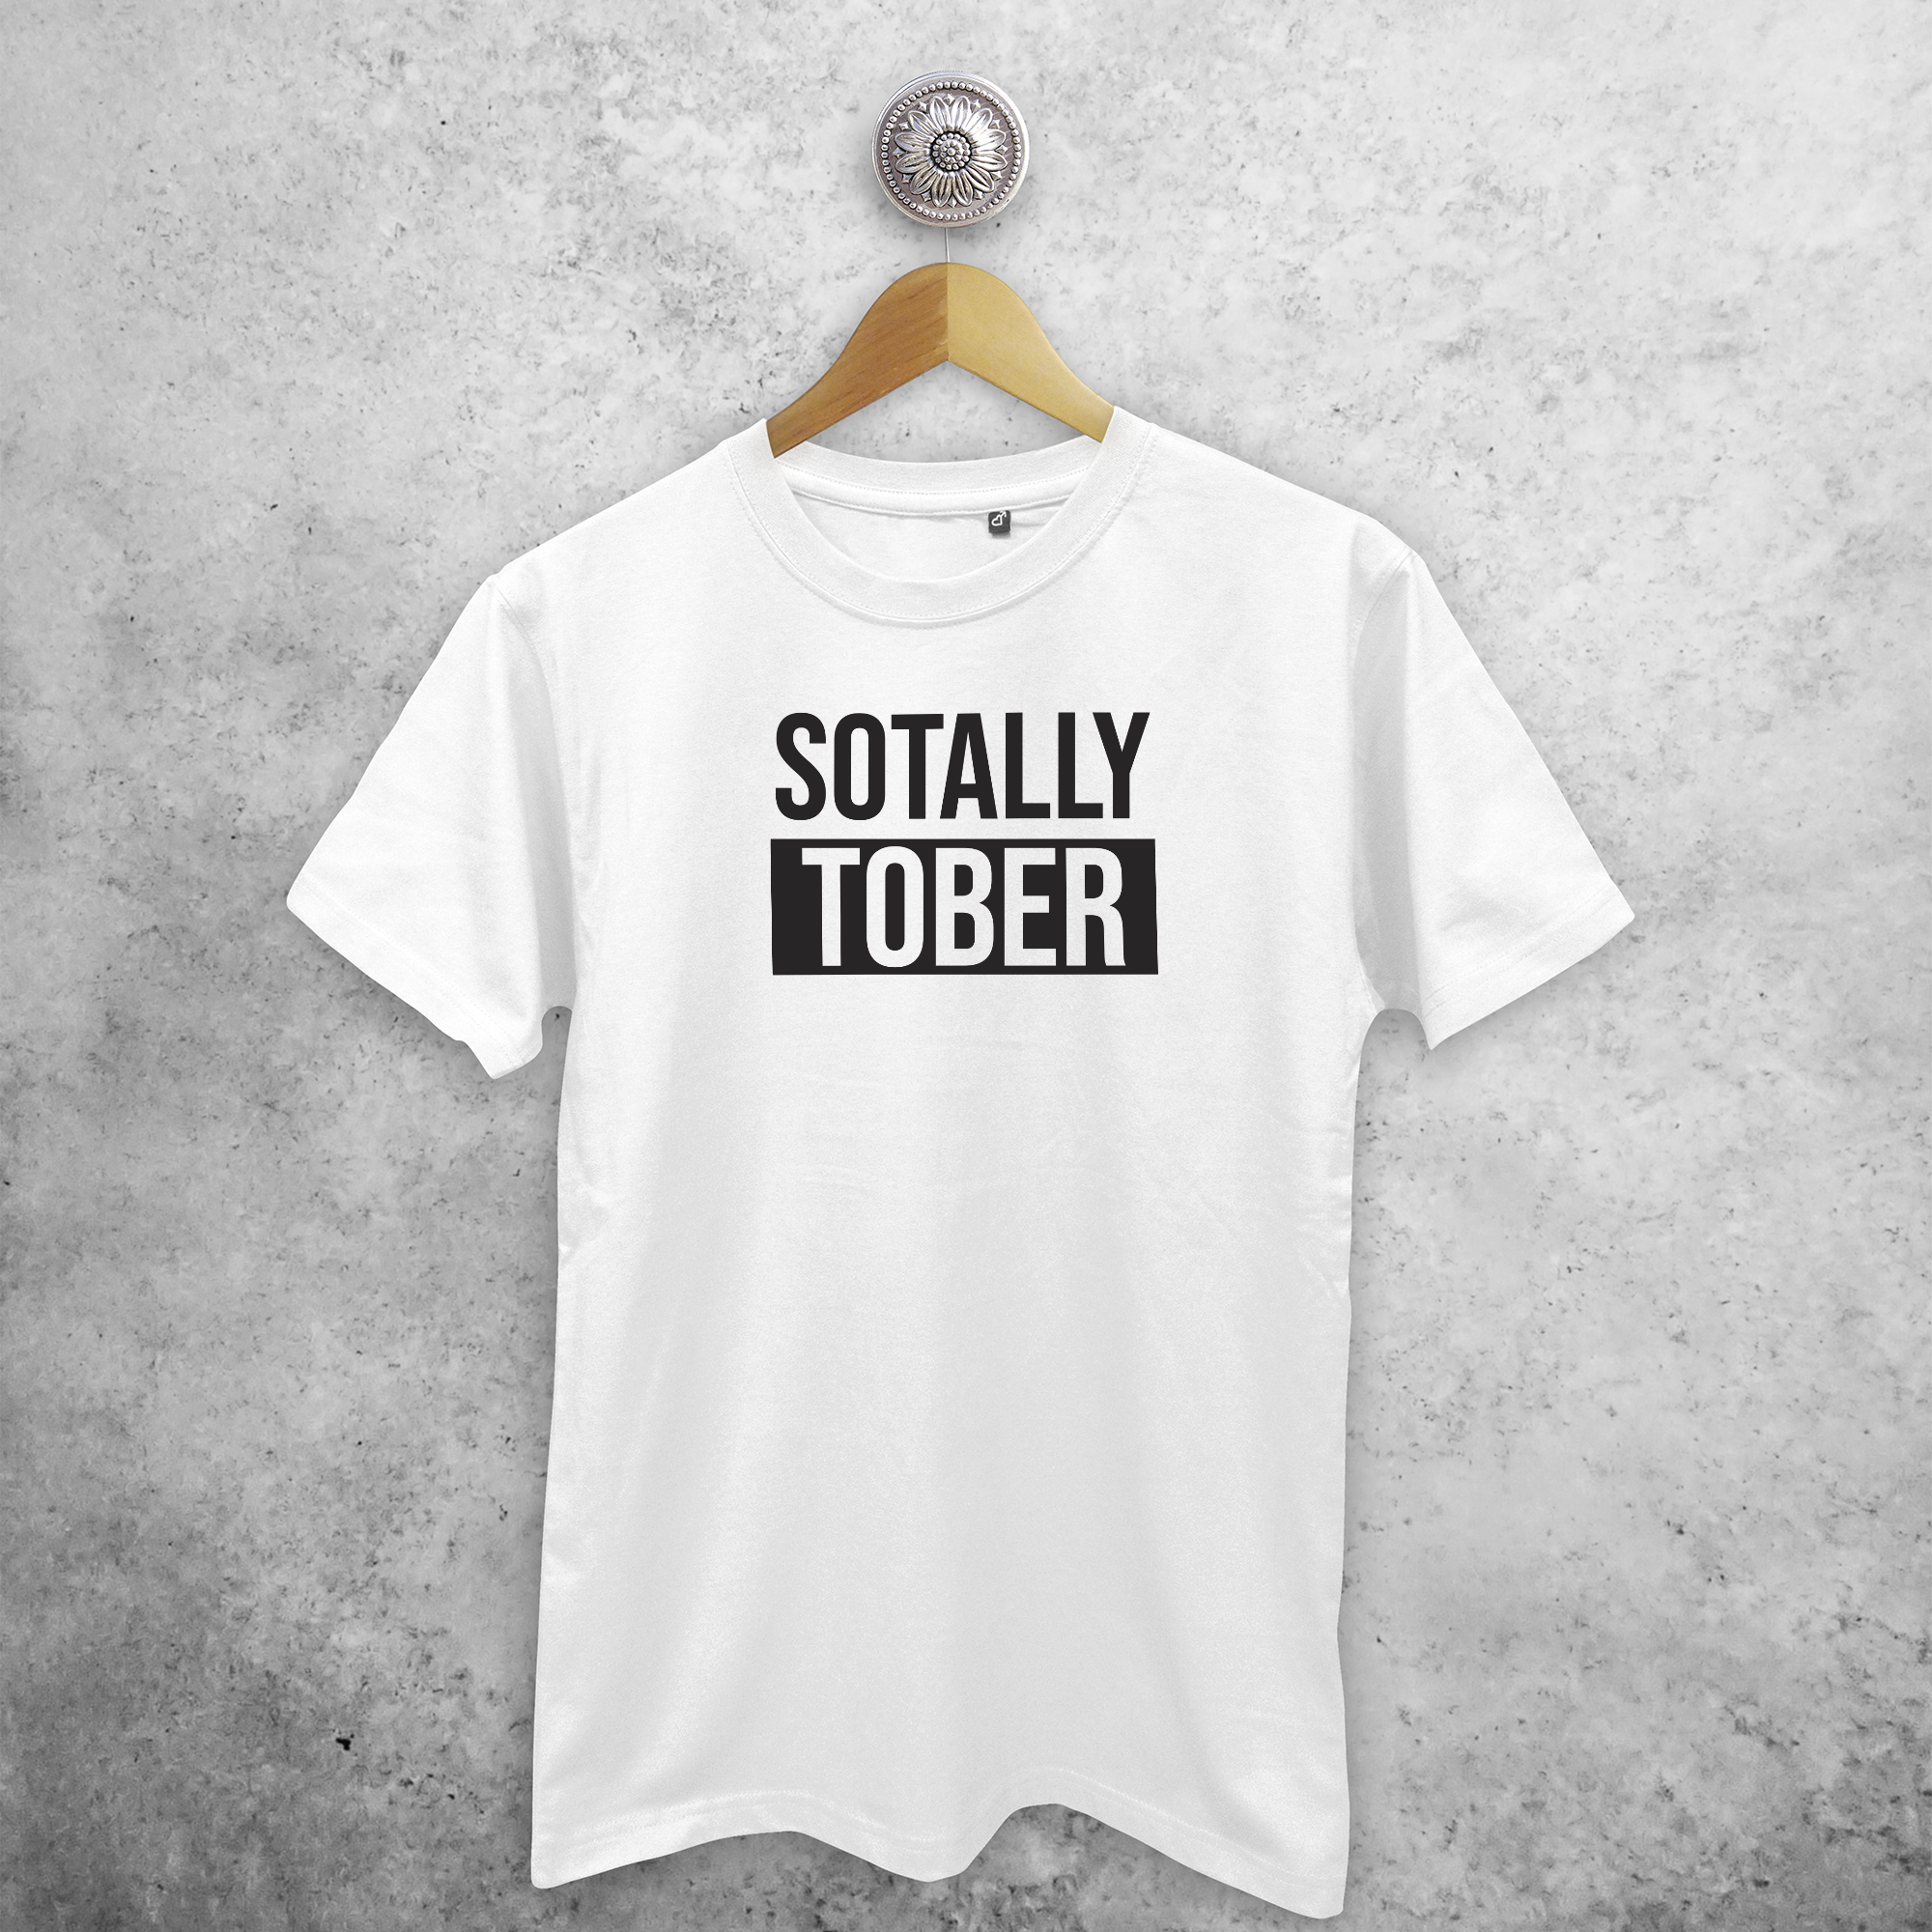 'Sotally tober' adult shirt